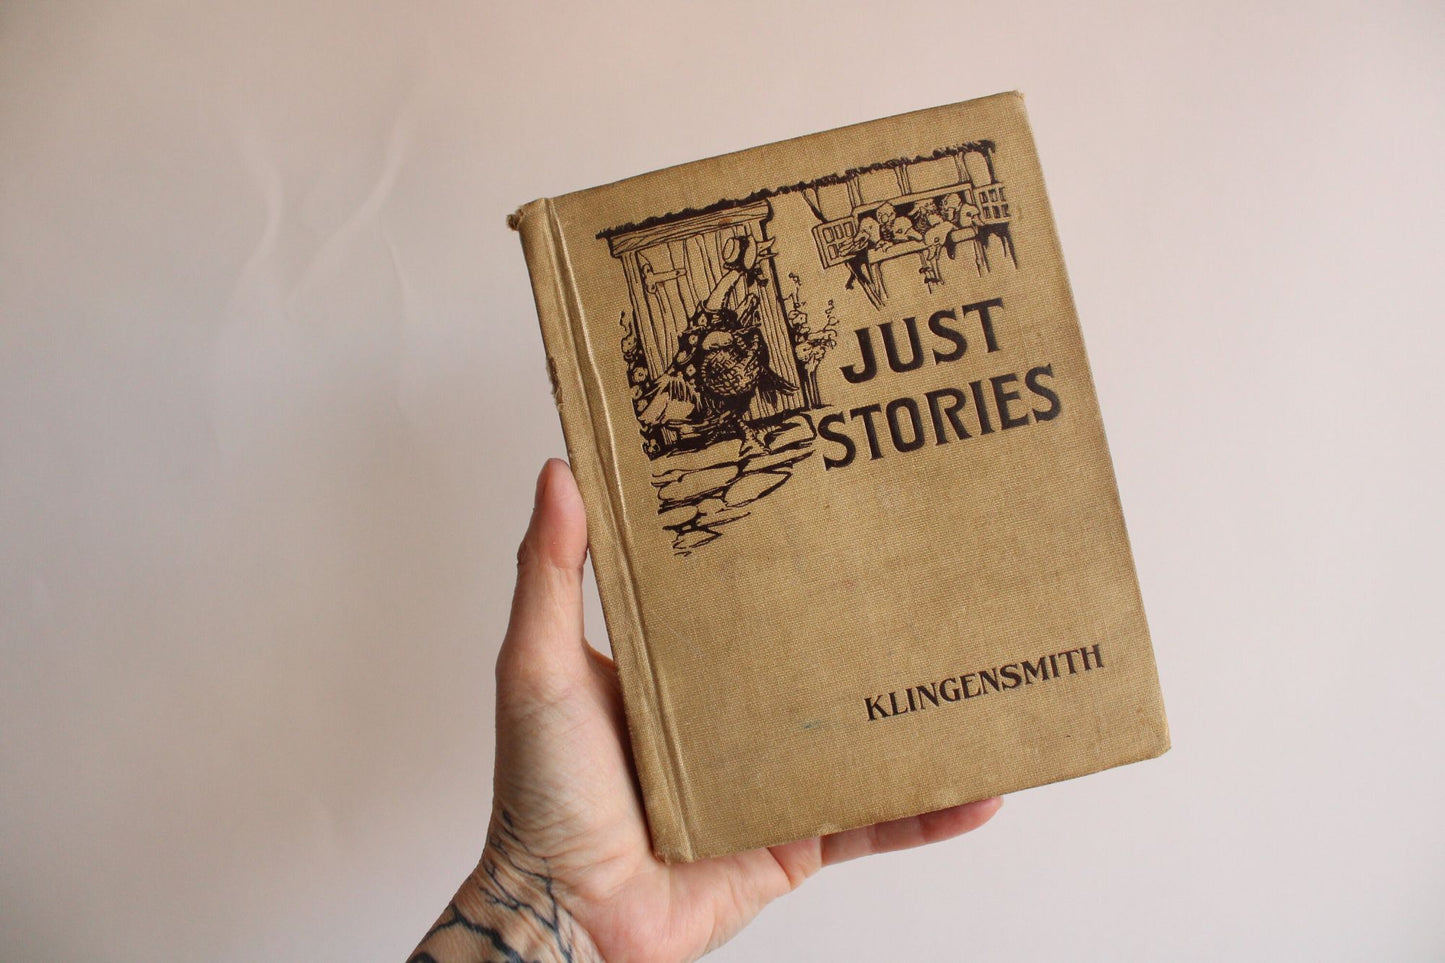 Vintage 1910s Book, "Just Stories" by Annie Klingensmith, Illustrated Antique Children's Book, 1916